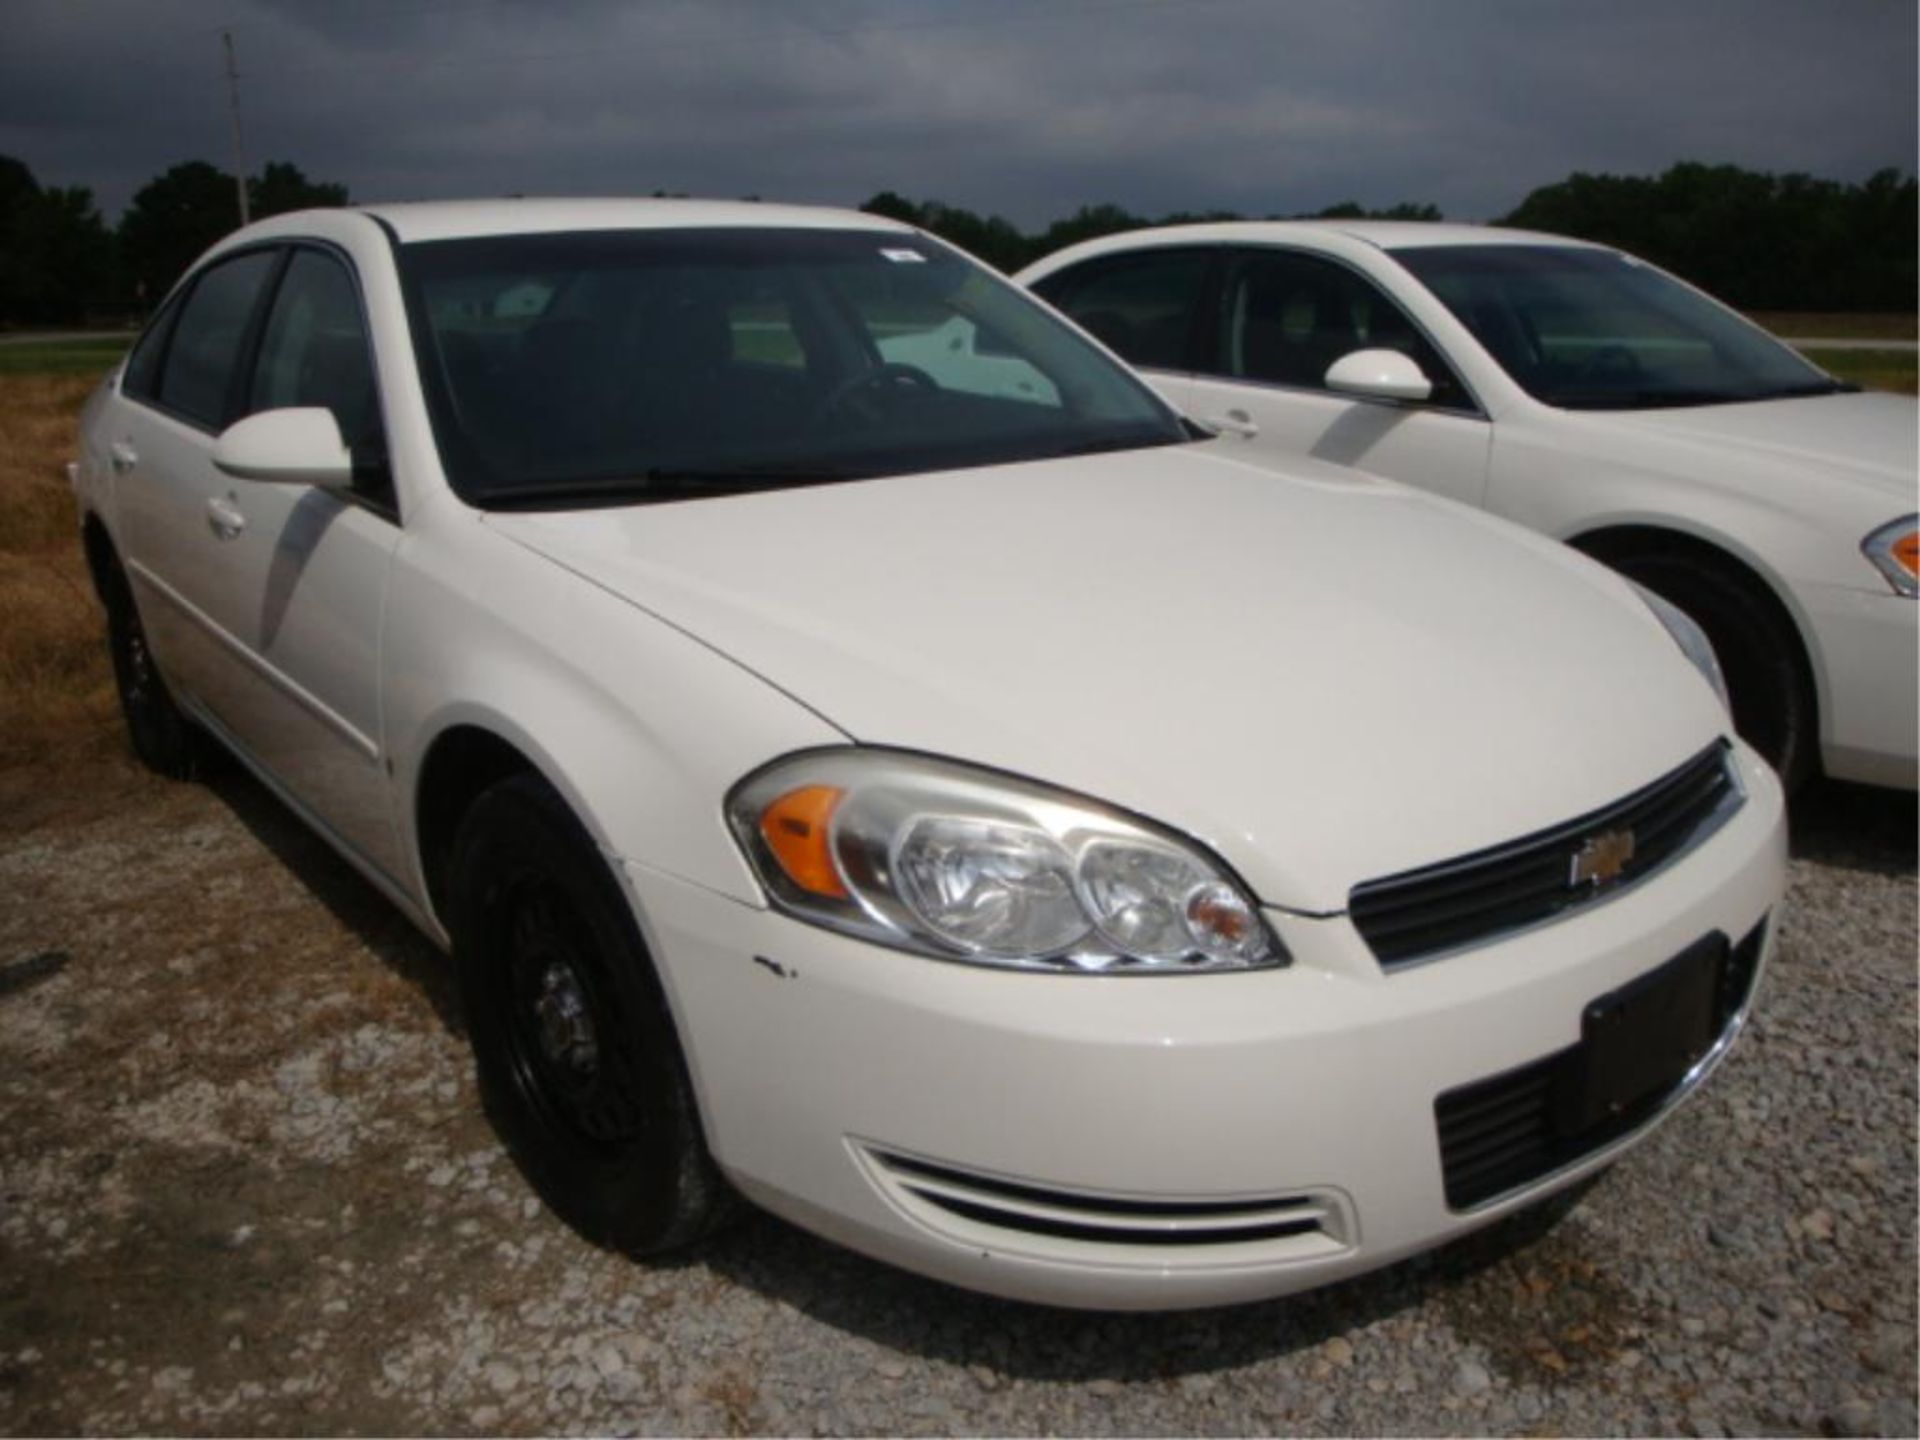 (Title) 2007 Chevrolet Impala 4 door, 3900 V6,73,036 mi. vin 2G1WS55R979417943 - Image 6 of 10